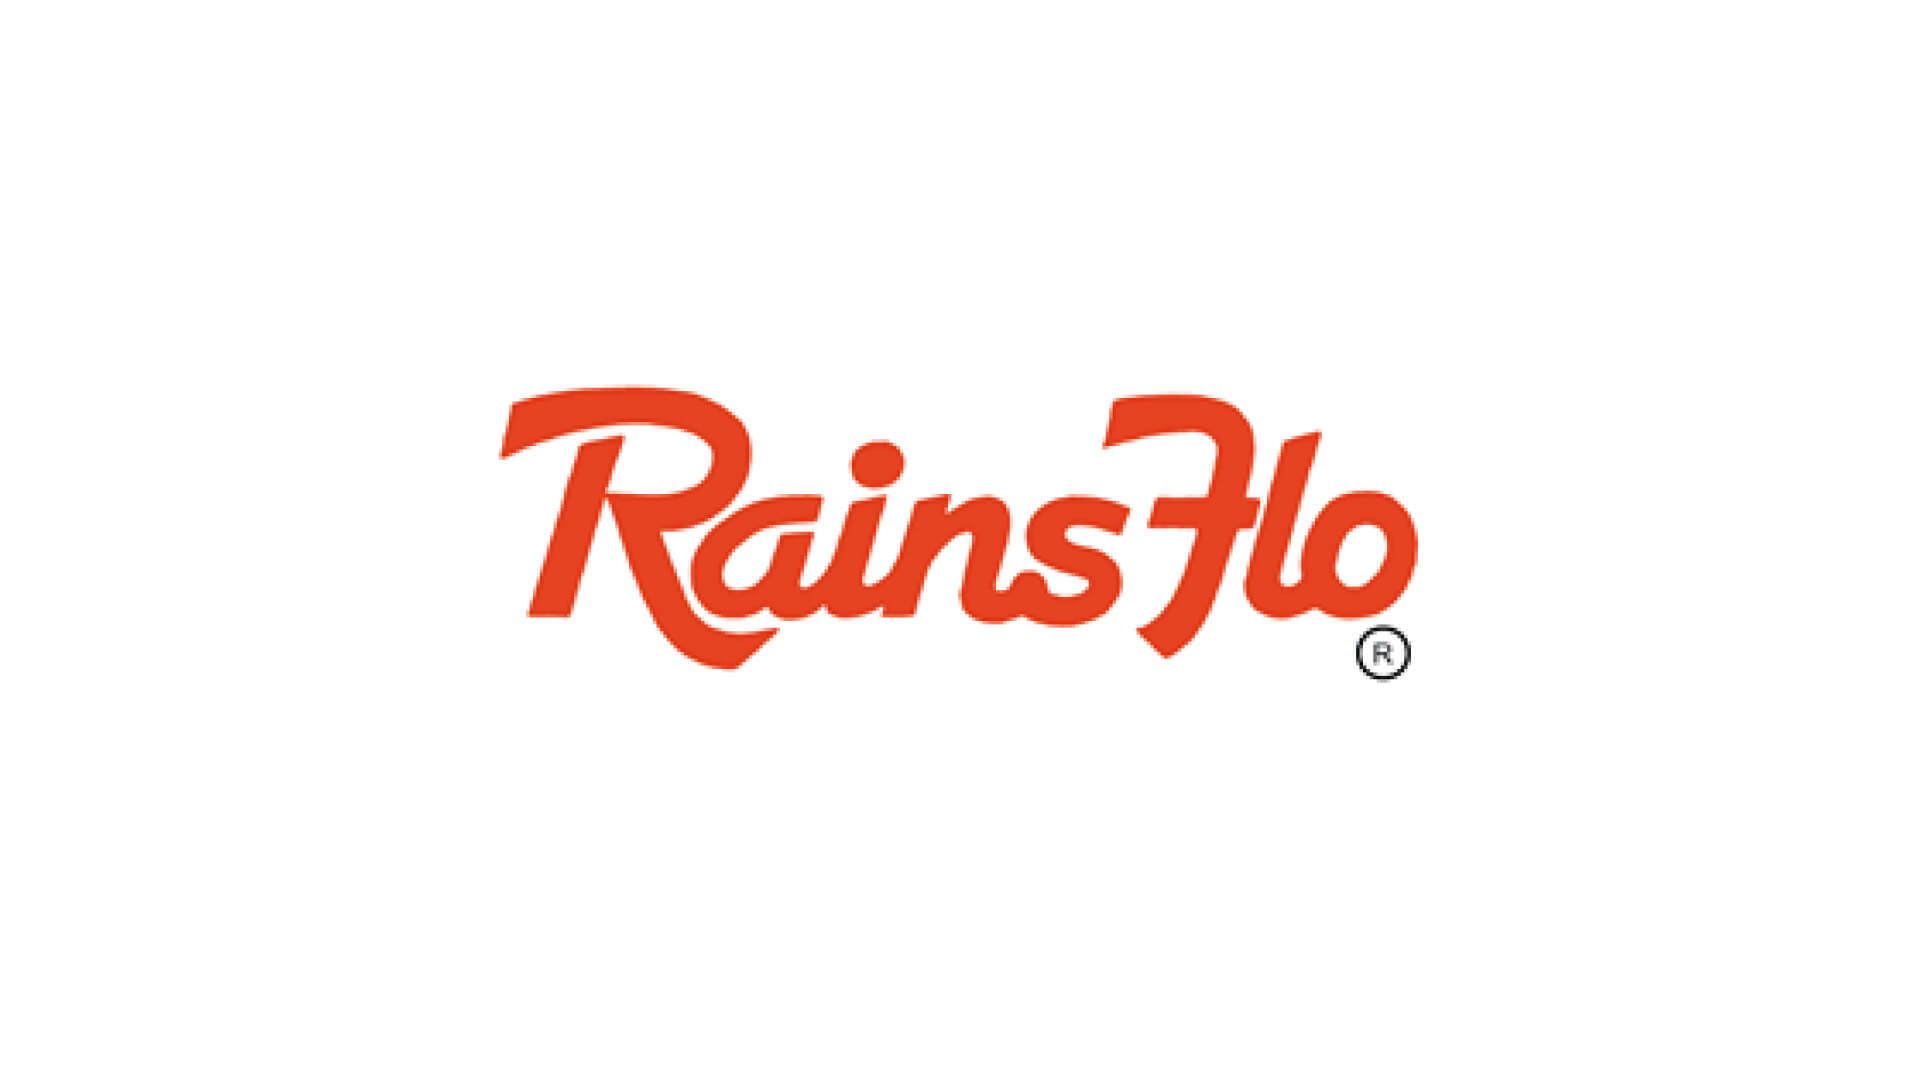 RainsFlo logo in color